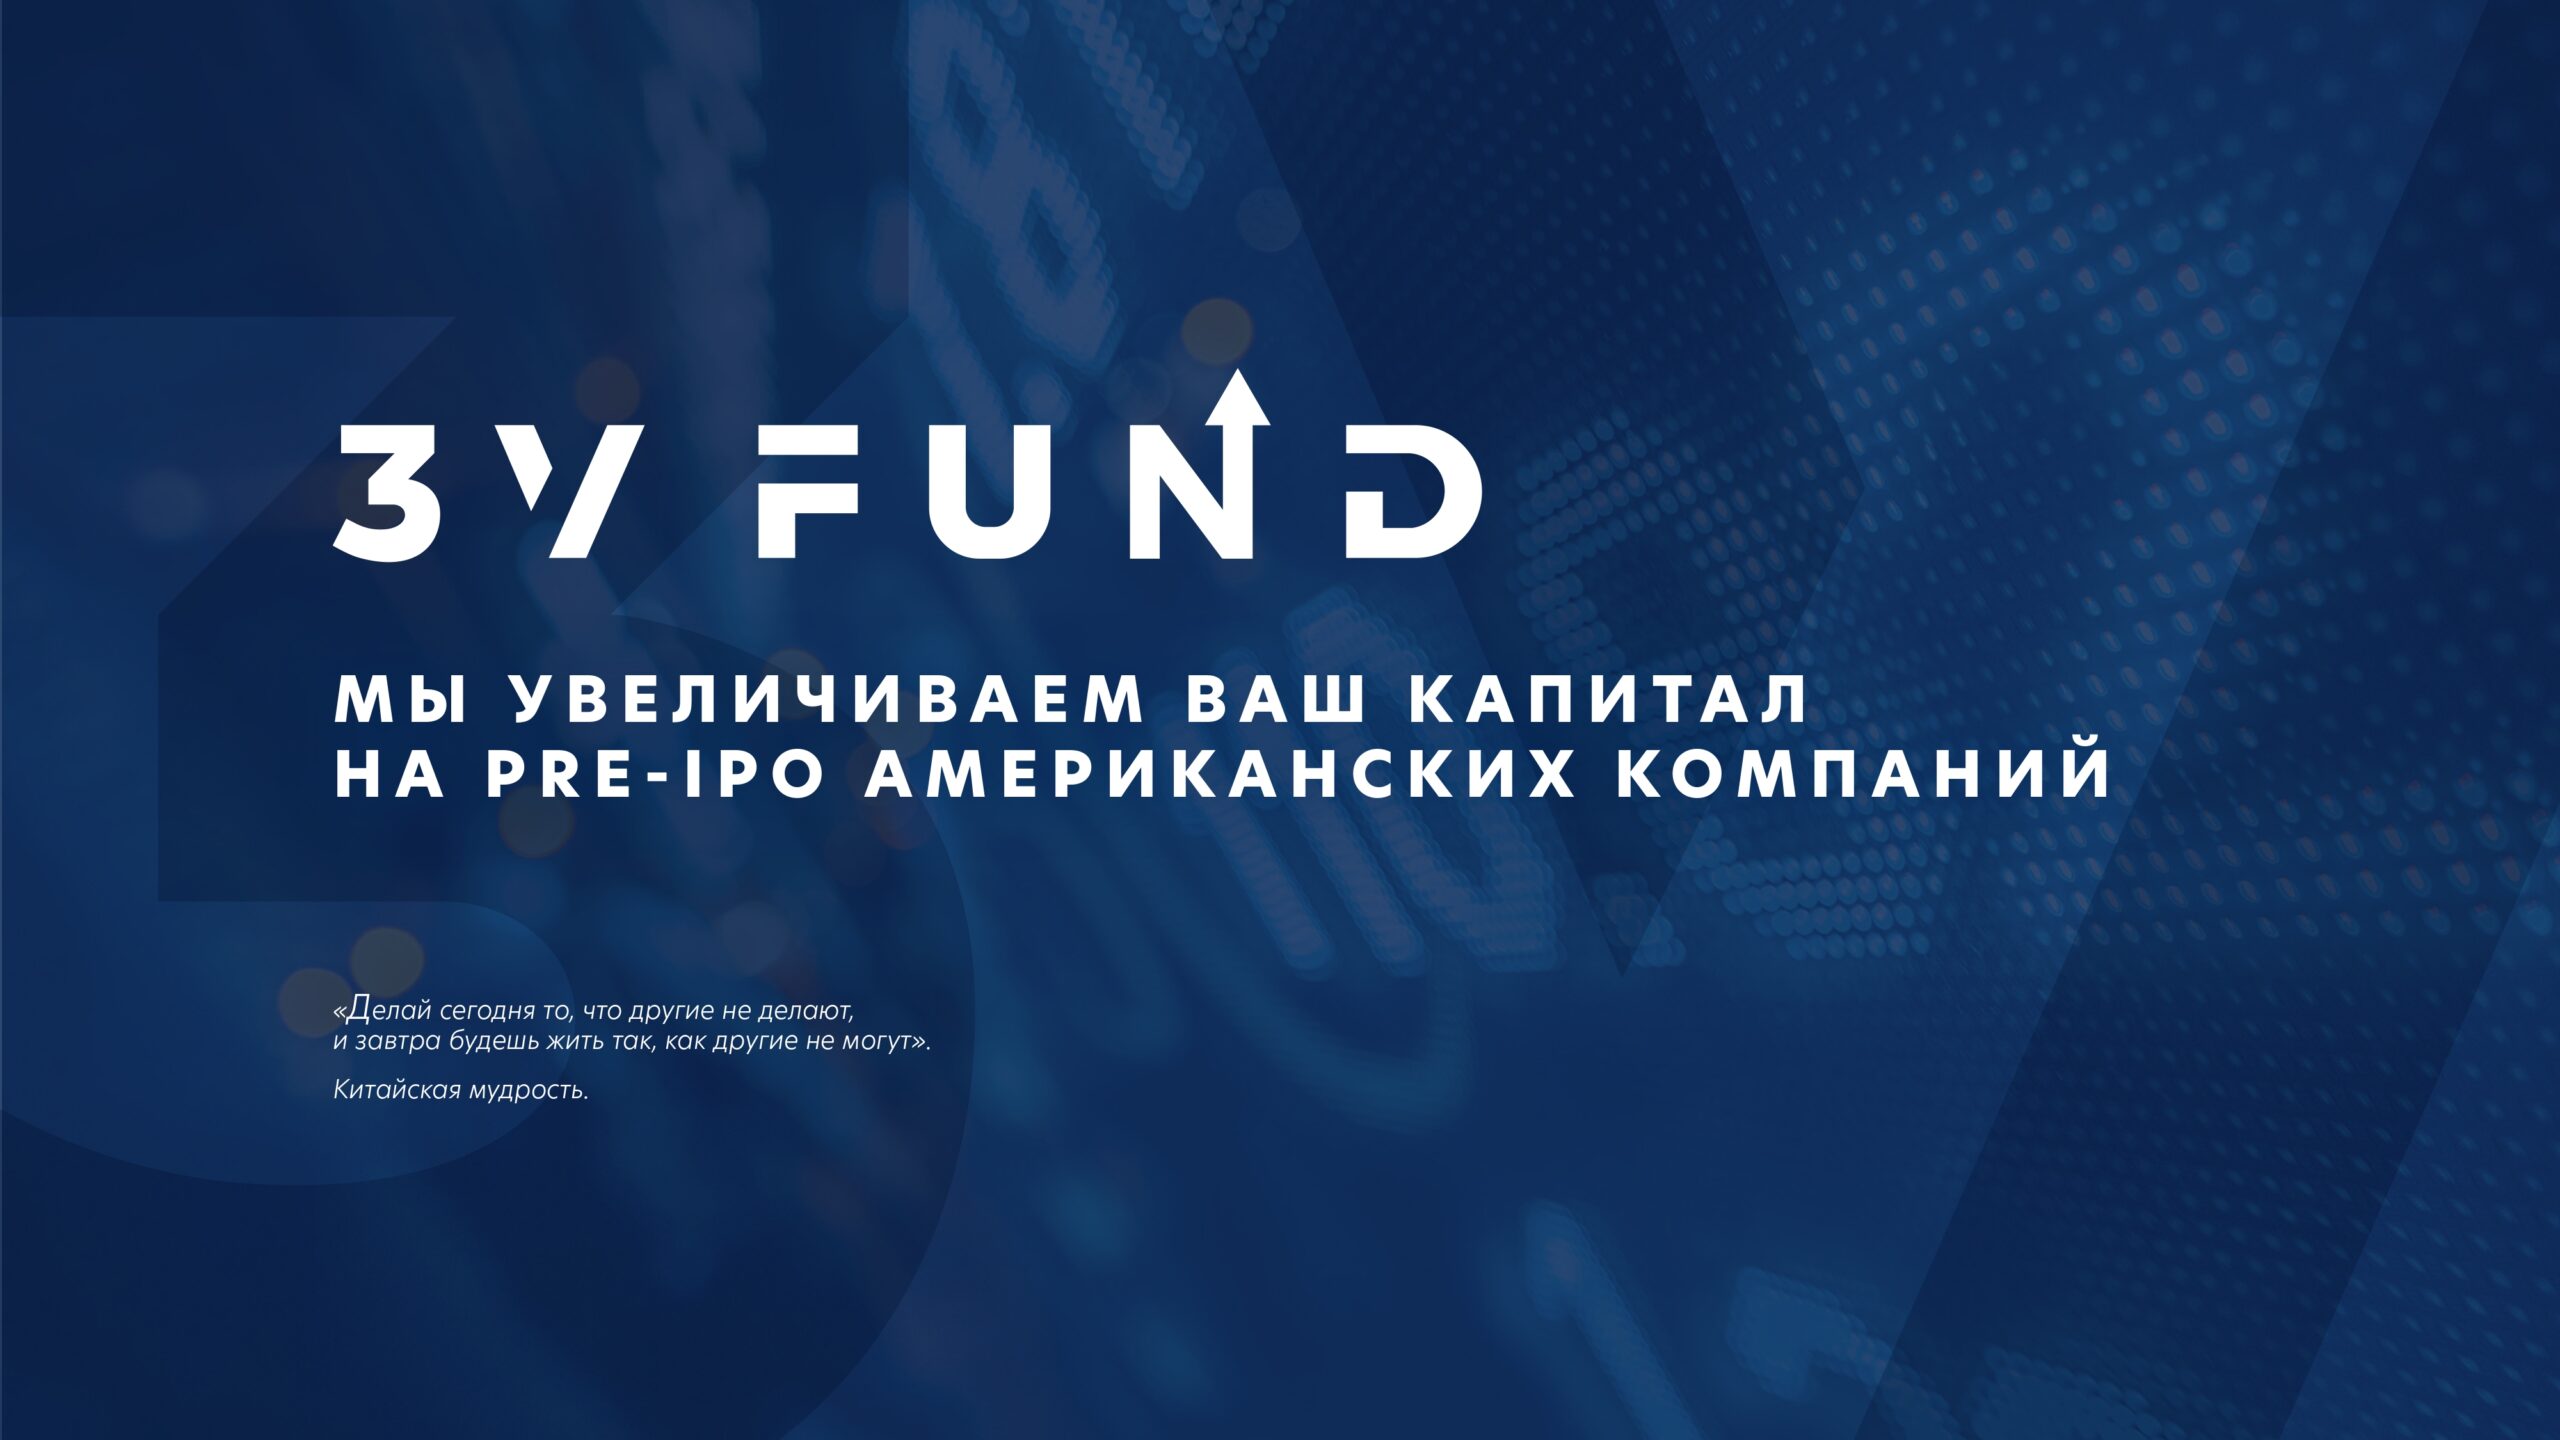 Презентация для инвестиционного фонда в сфере Pre-IPO слайд 1